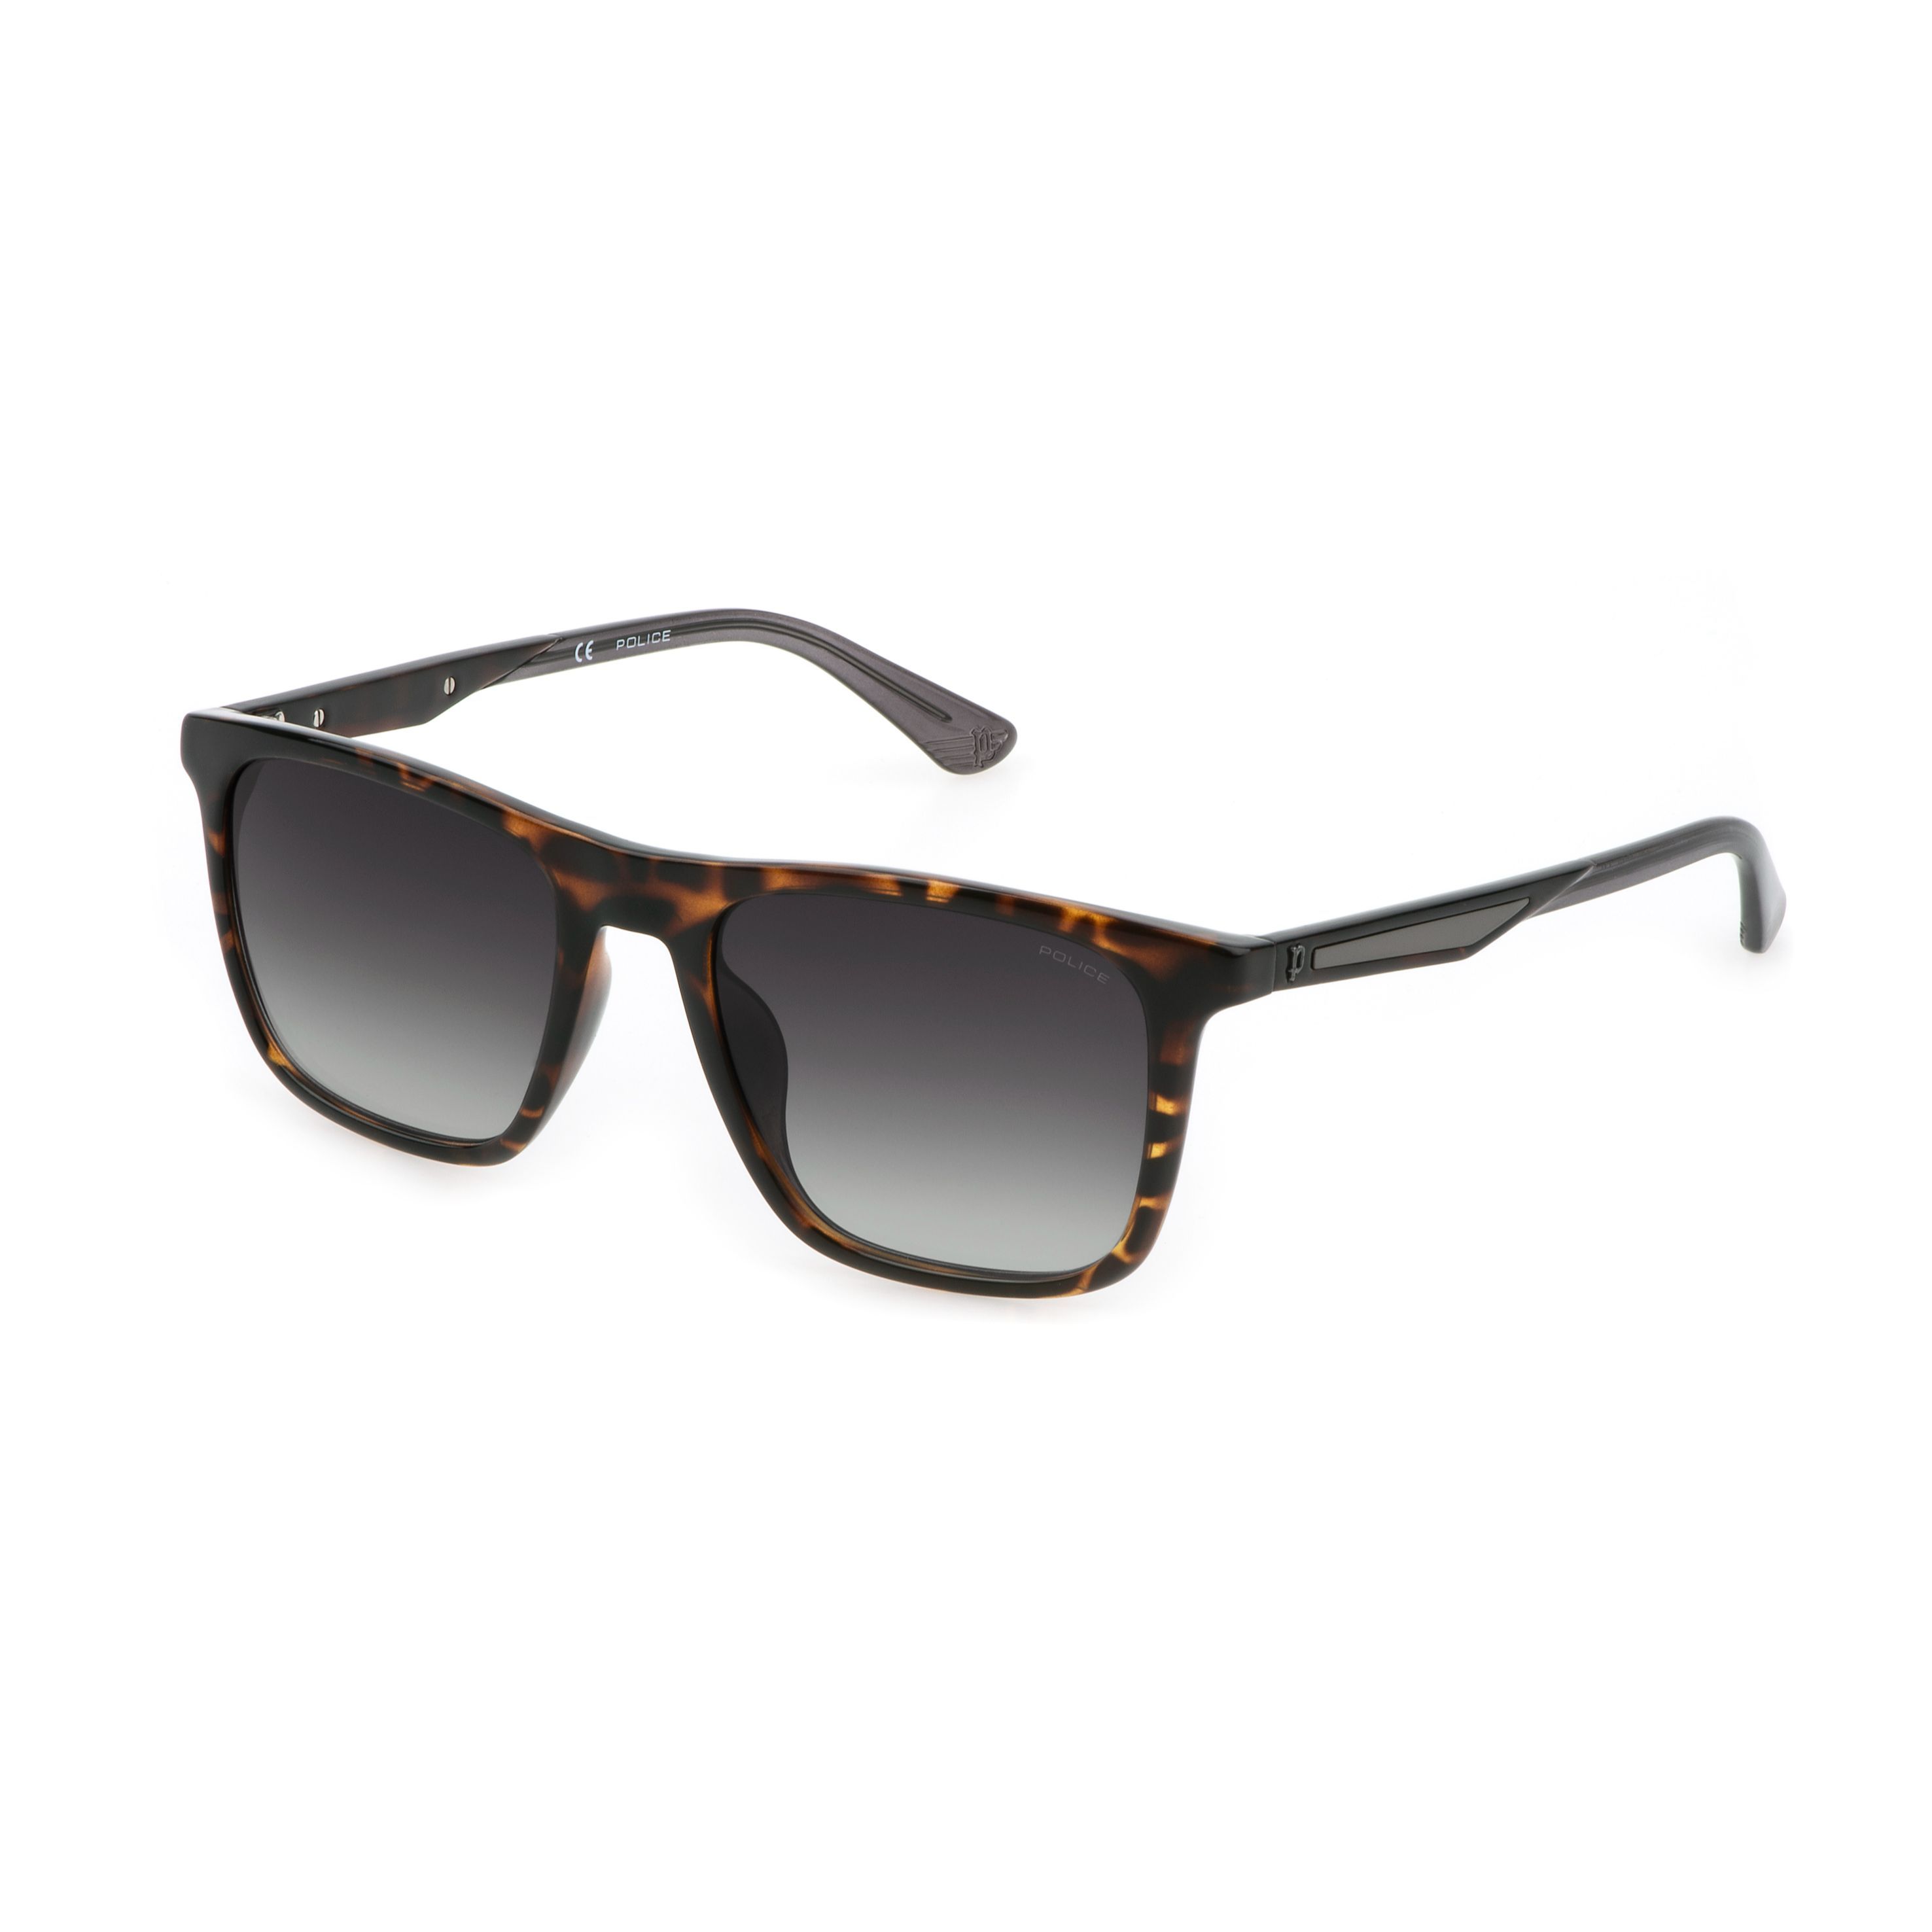 SPLF17M Square Sunglasses 978 - size 54